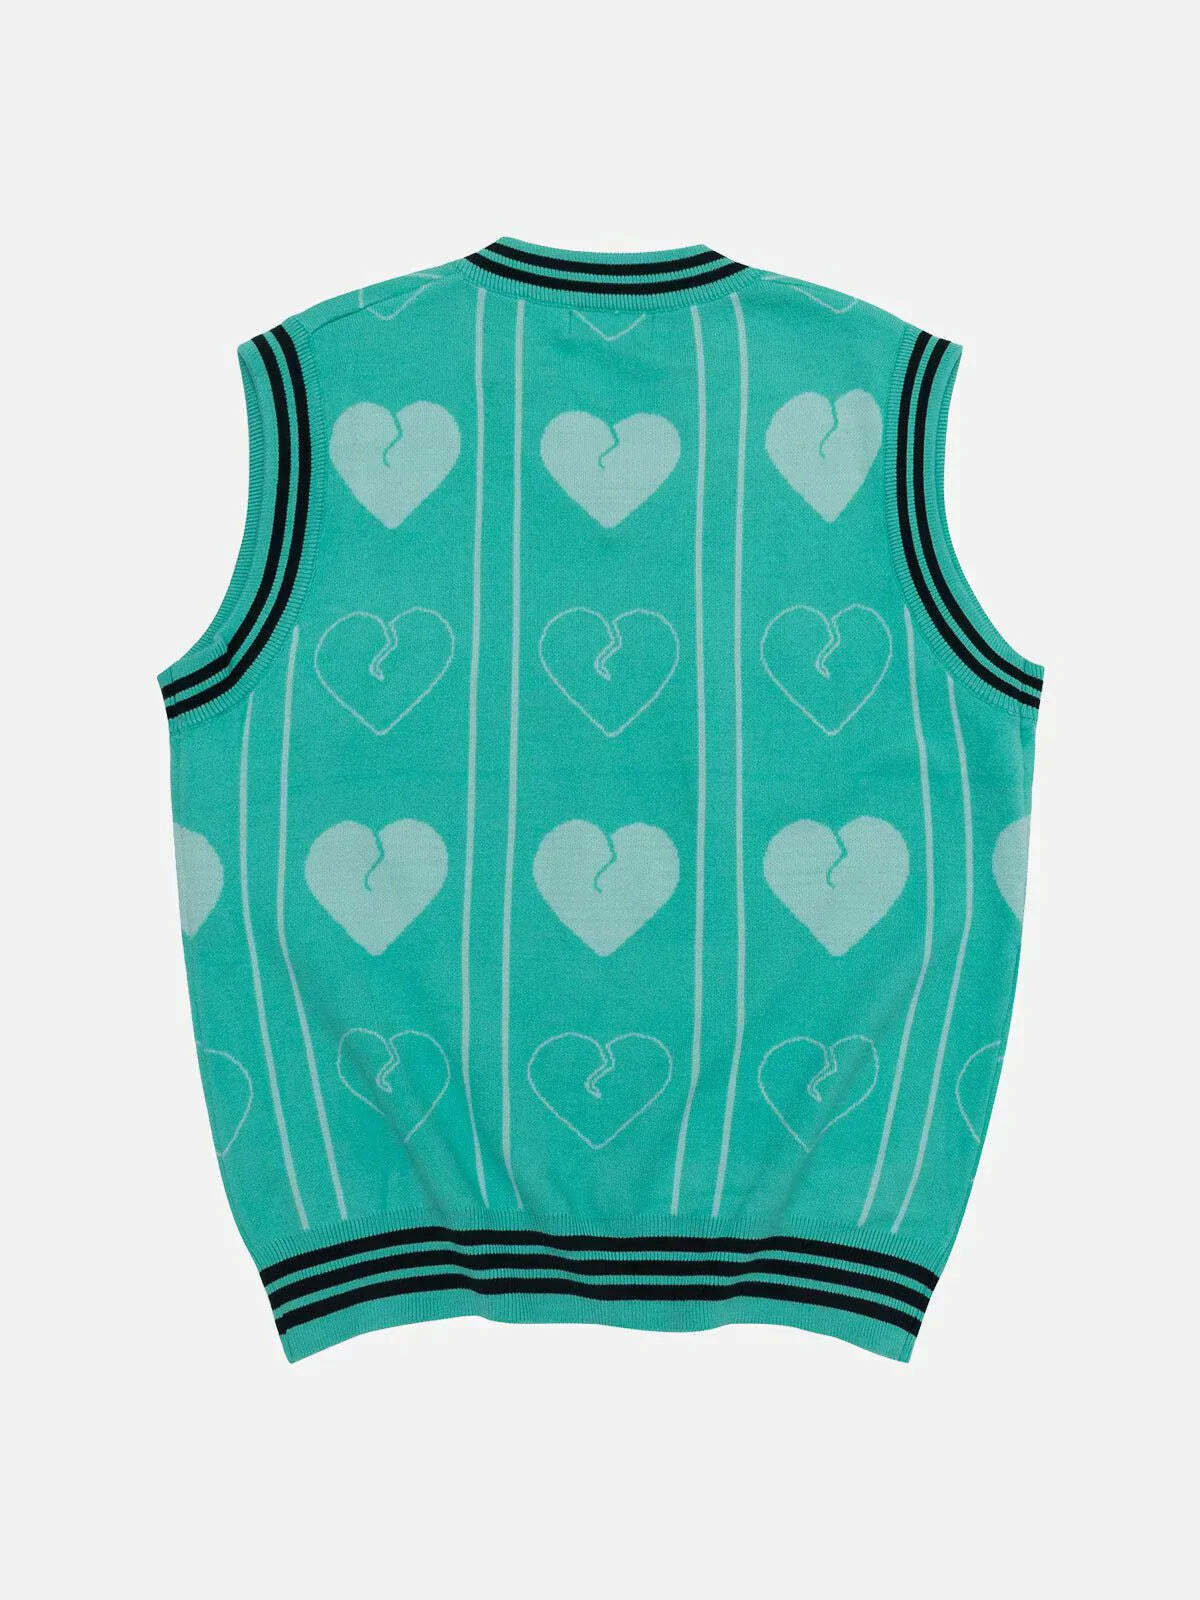 colorblock heart sweater vest edgy & vibrant streetwear 6045